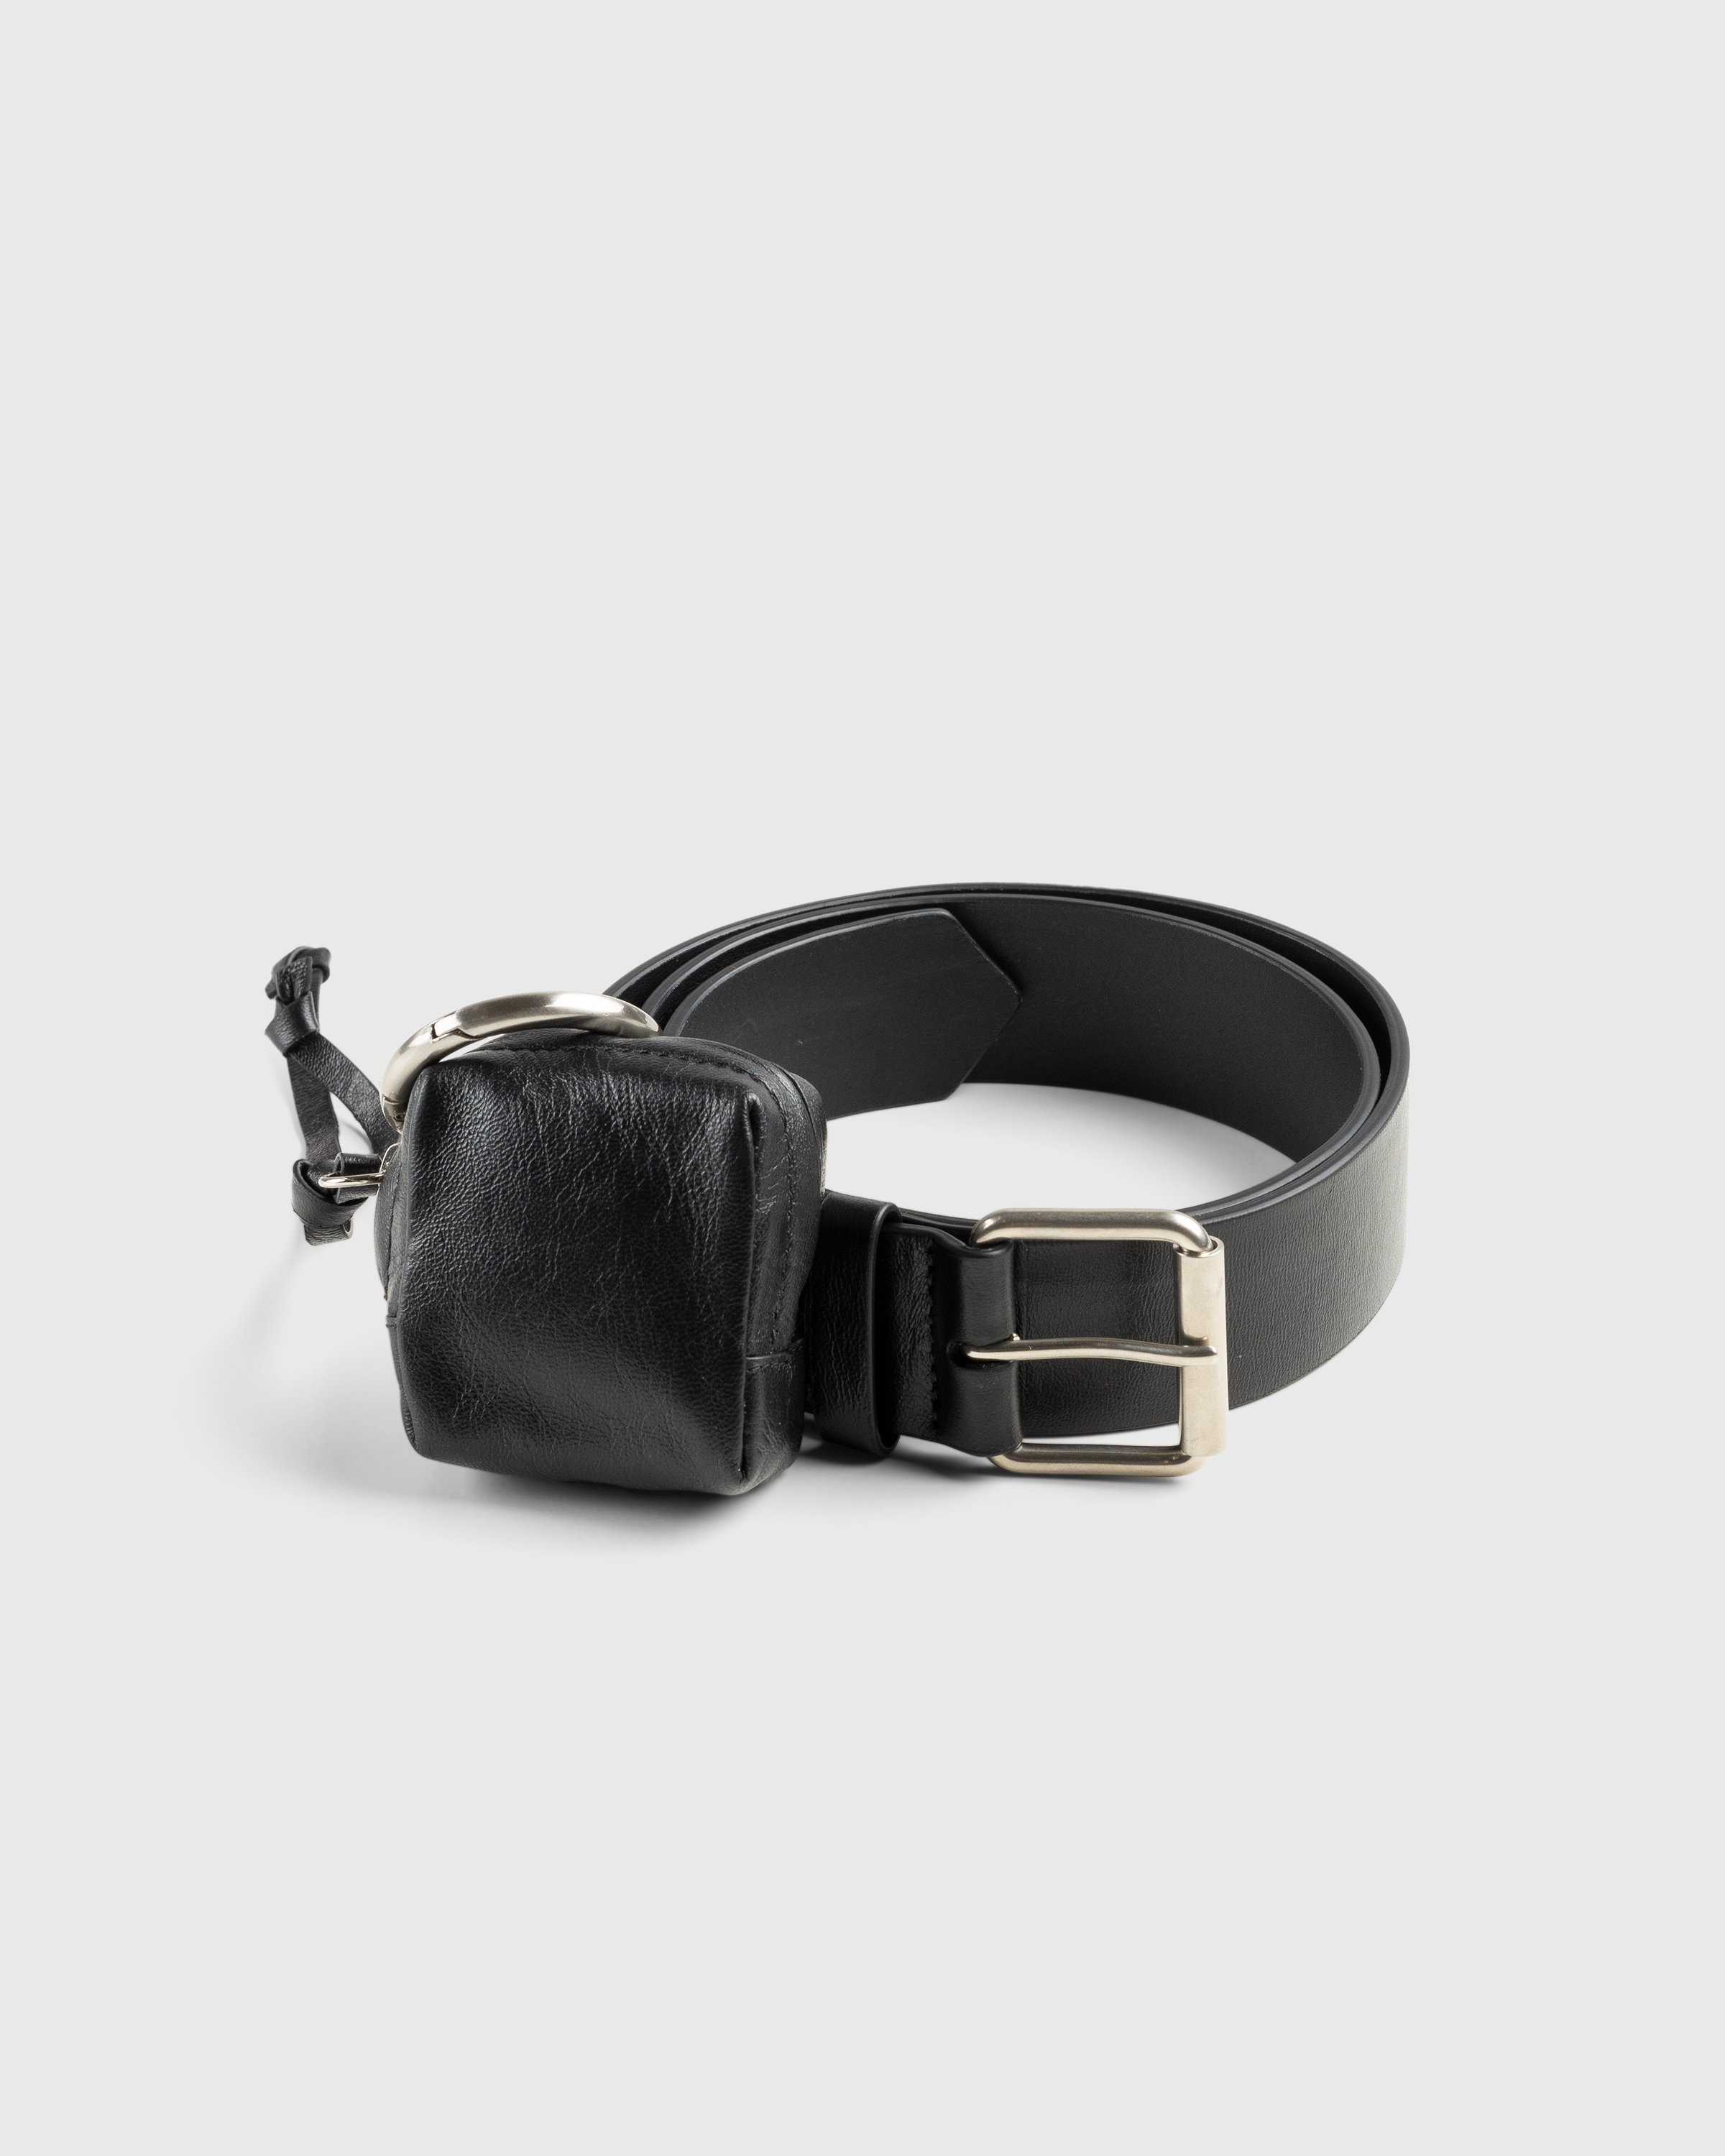 Dries van Noten – Leather Belt With Pouch Black | Highsnobiety Shop